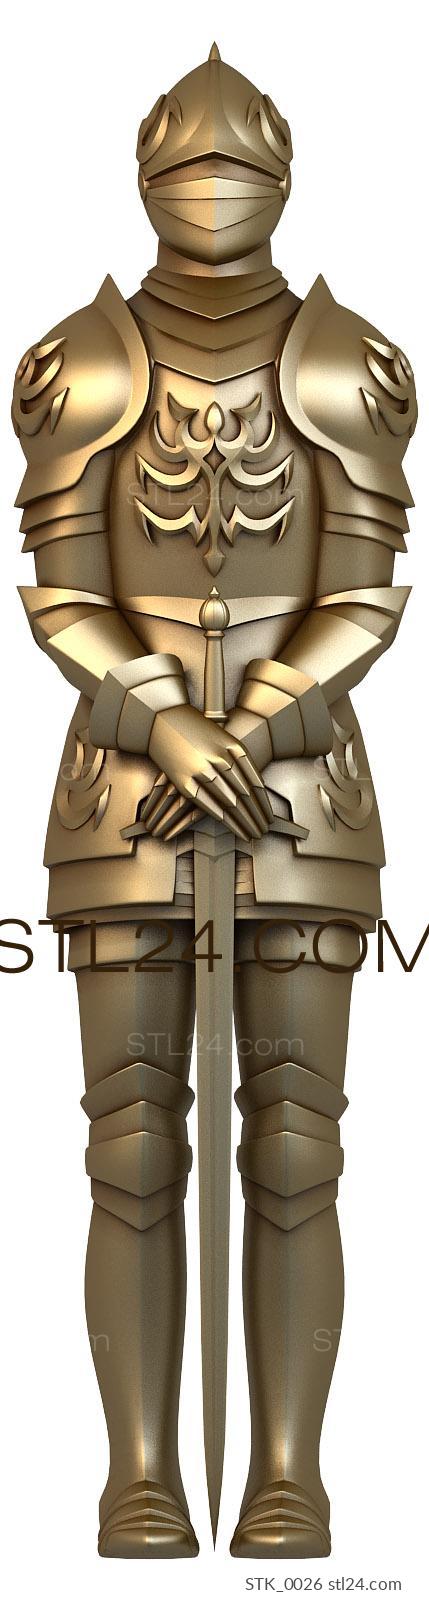 Statuette (STK_0026) 3D models for cnc